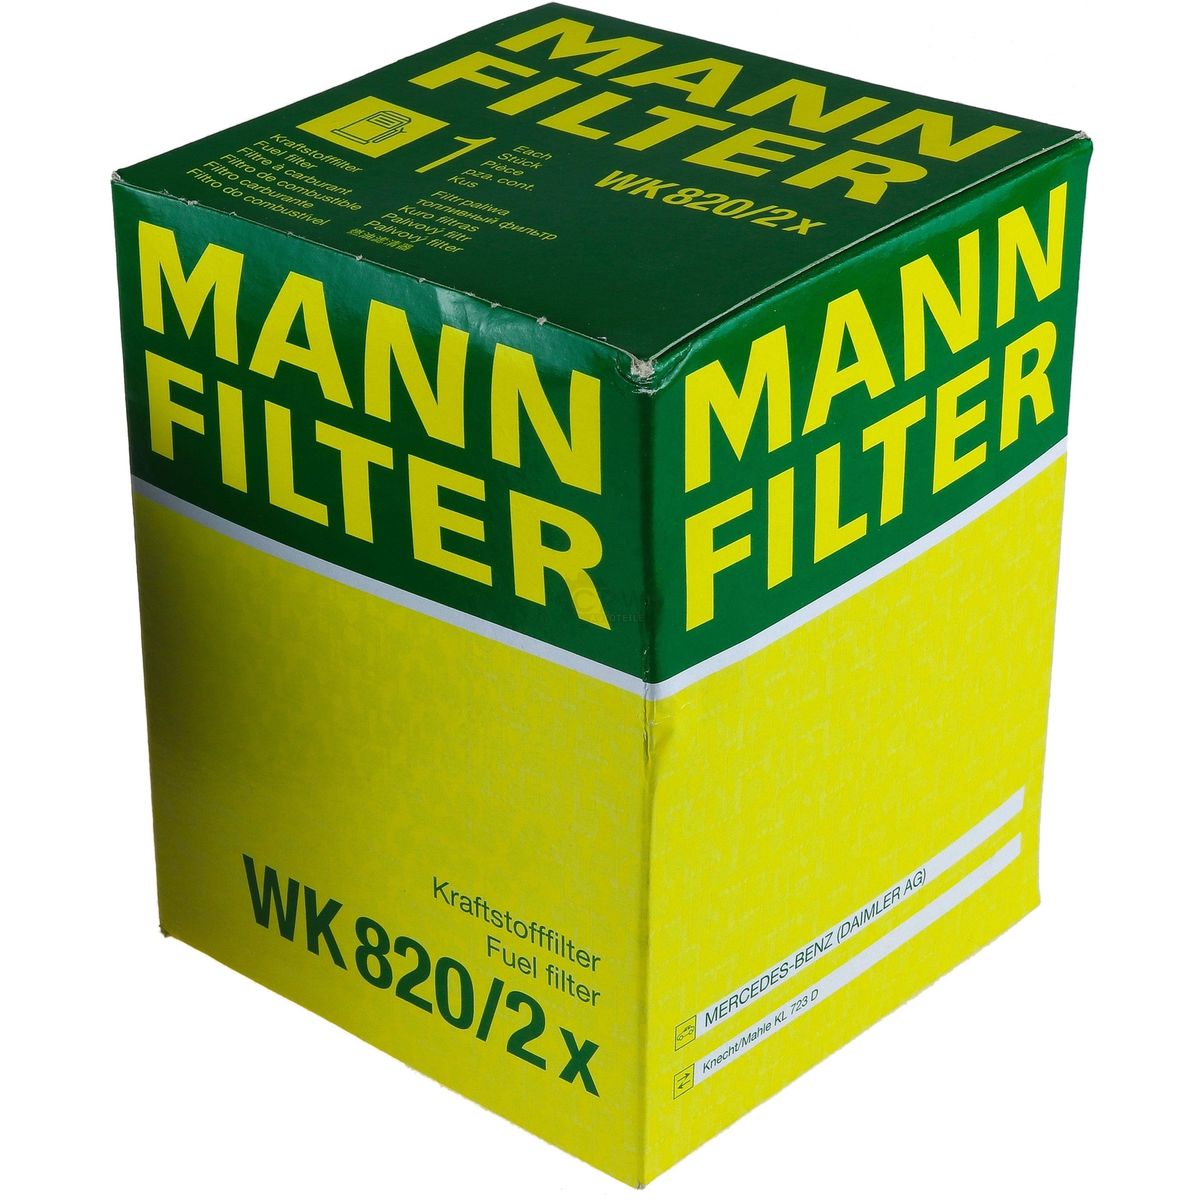 Mann+hummel Wk8202x Filtre A Carburant